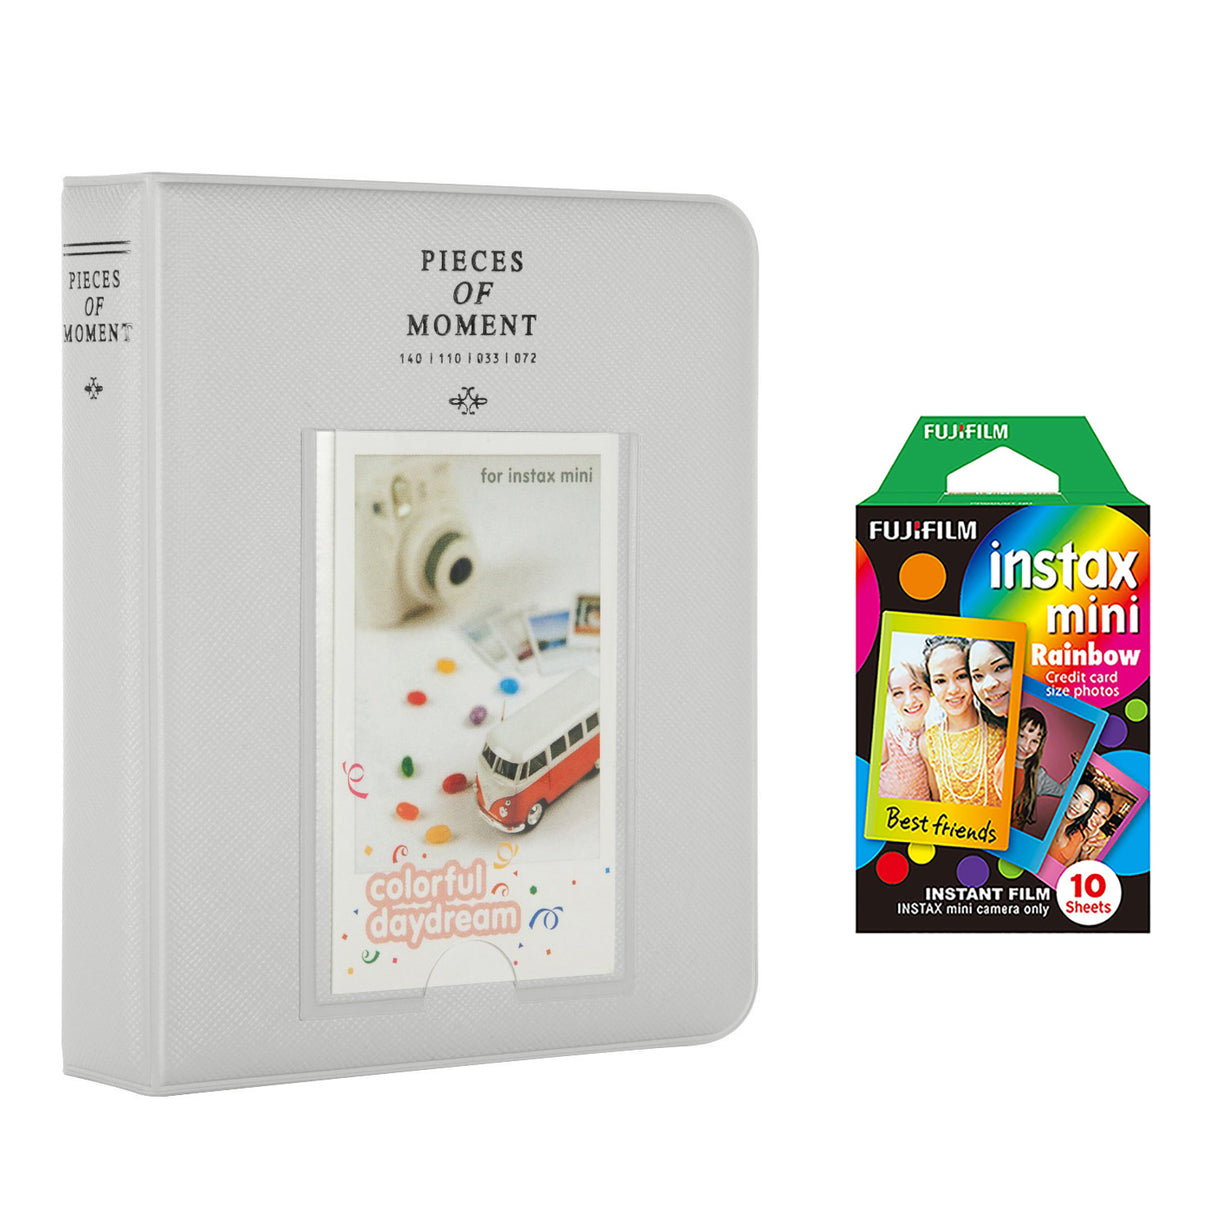 Fujifilm Instax Mini 10X1 rainbow Instant Film with Instax Time Photo Album 64 Sheets Smokey white